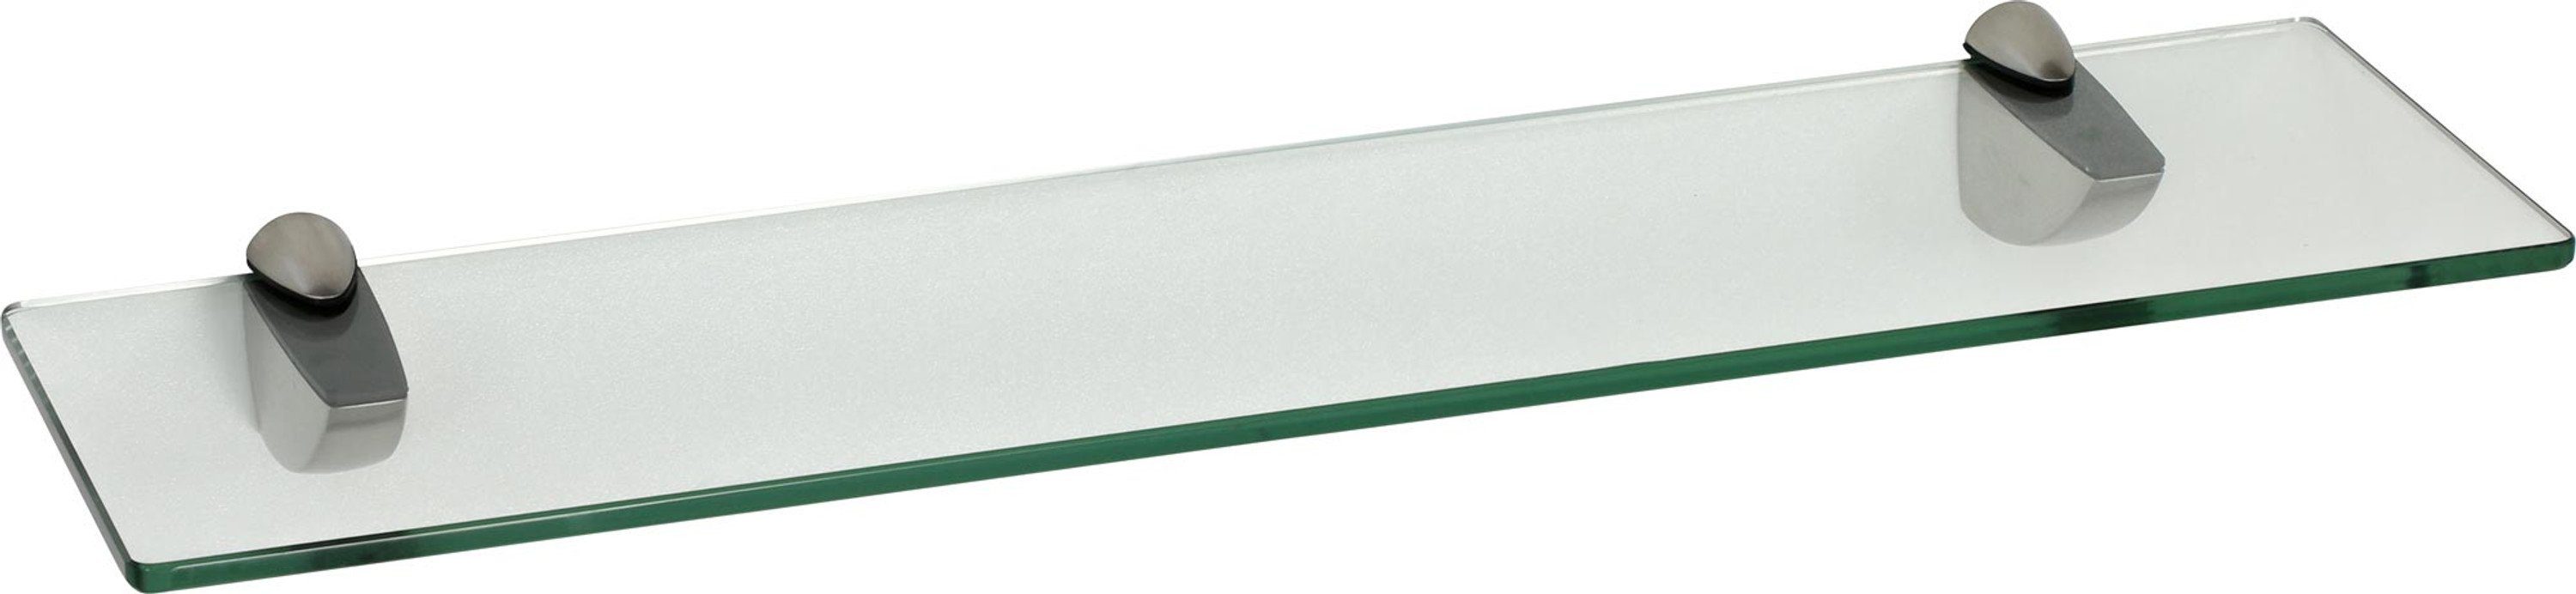 ib style Wandregal Glasregal 8mm eckig klar 40 x 15 cm + Clip PELI Edelstahloptik, Glasboden aus ESG-Sicherheitsglas - Wandregal